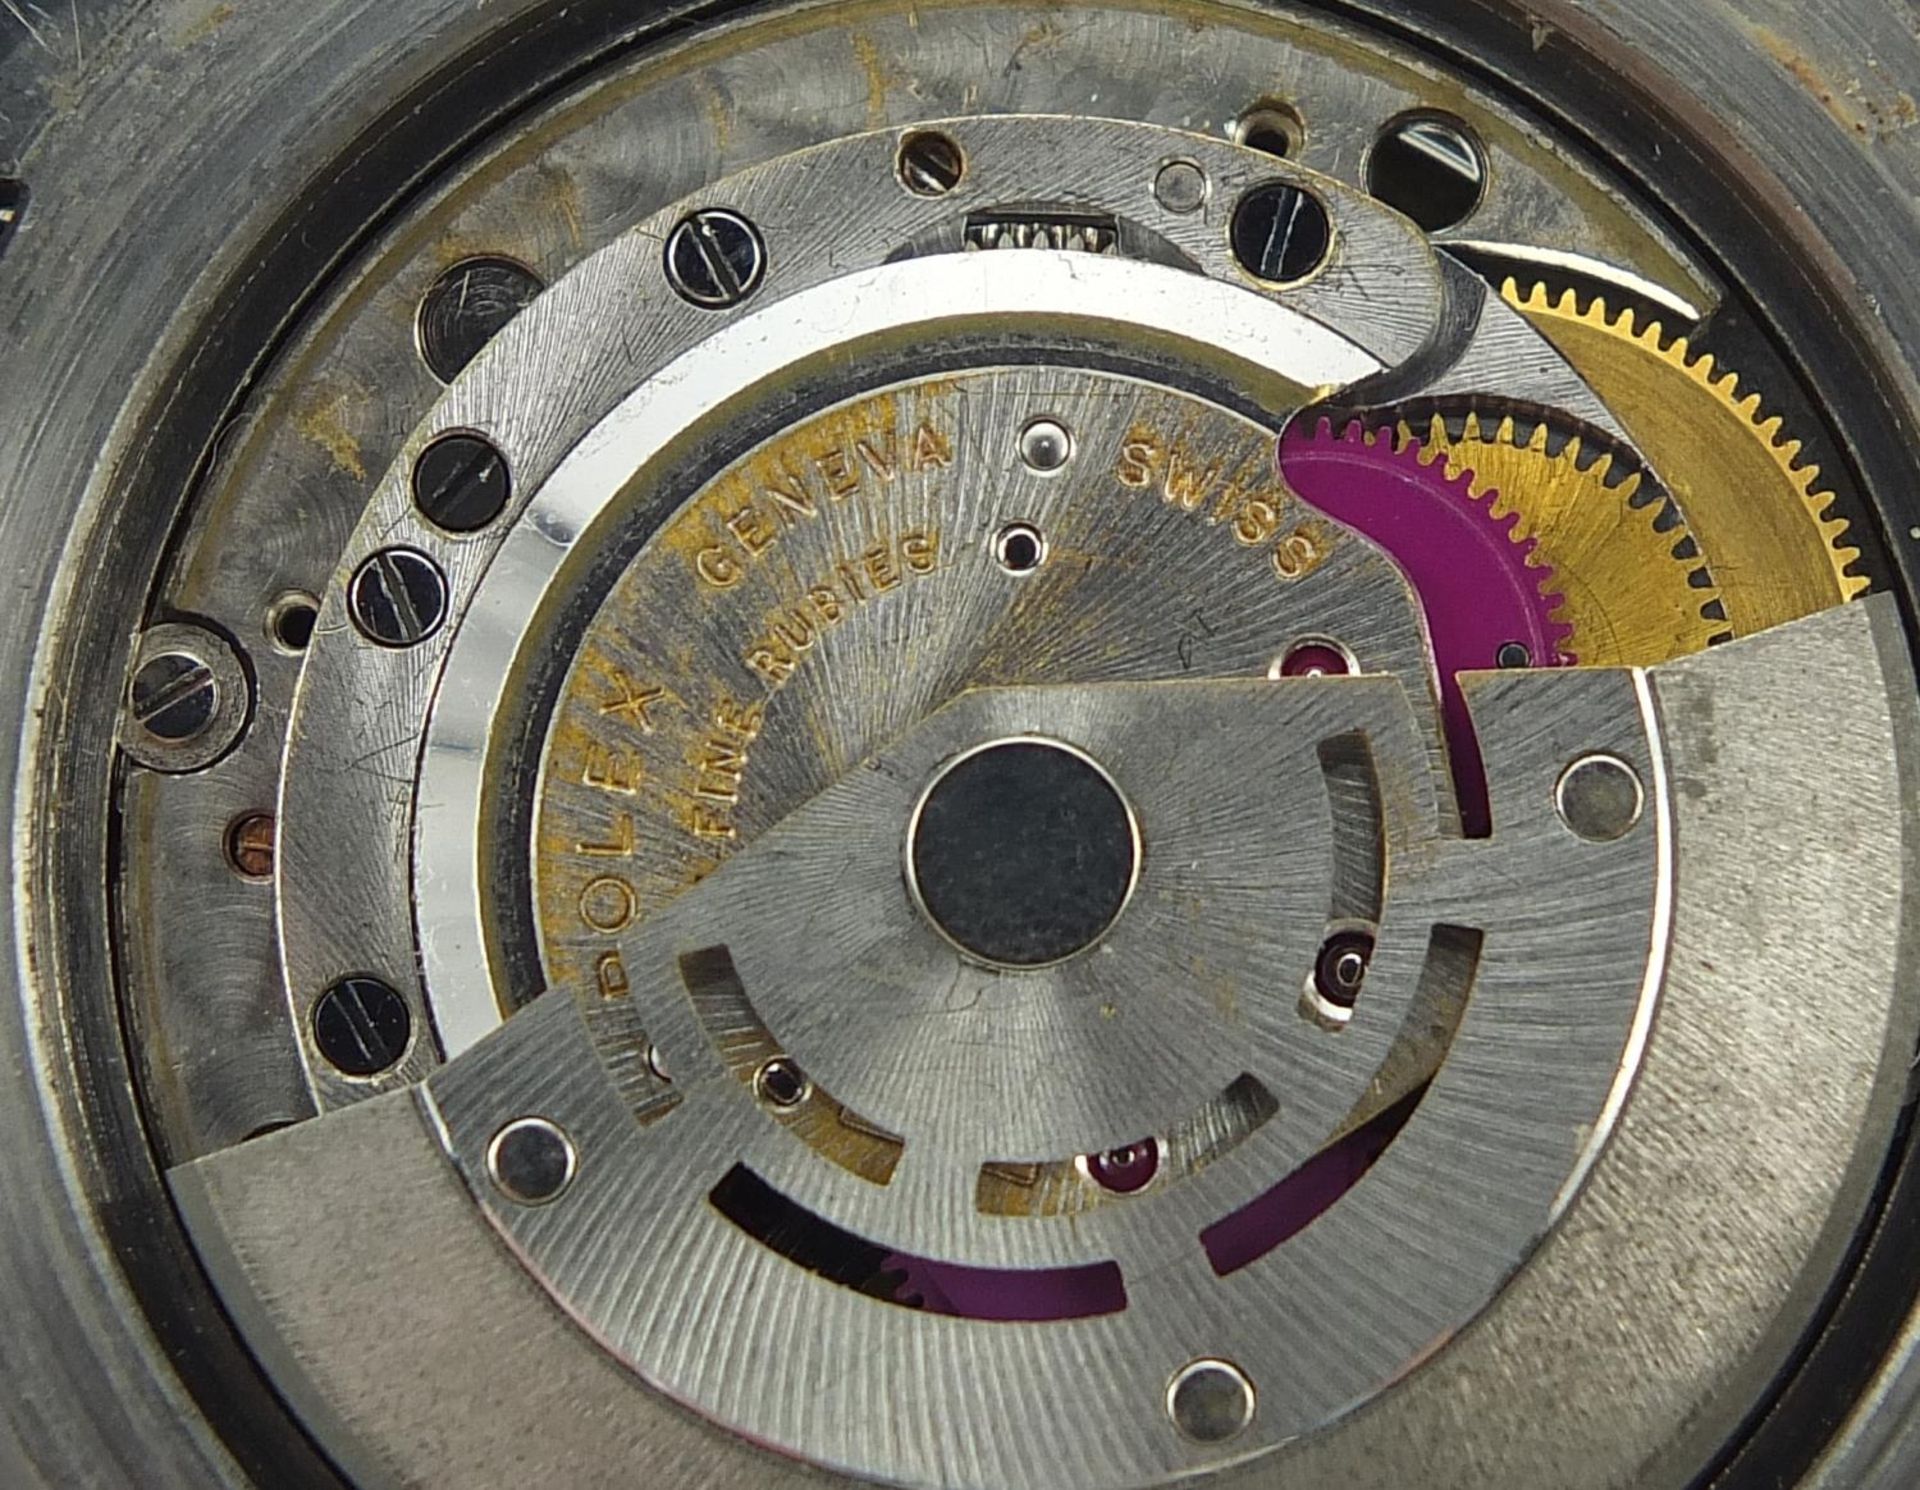 Rolex gentlemen's Submariner automatic wristwatch, ref 5513, serial number 1005684, 40mm in diameter - Image 6 of 9